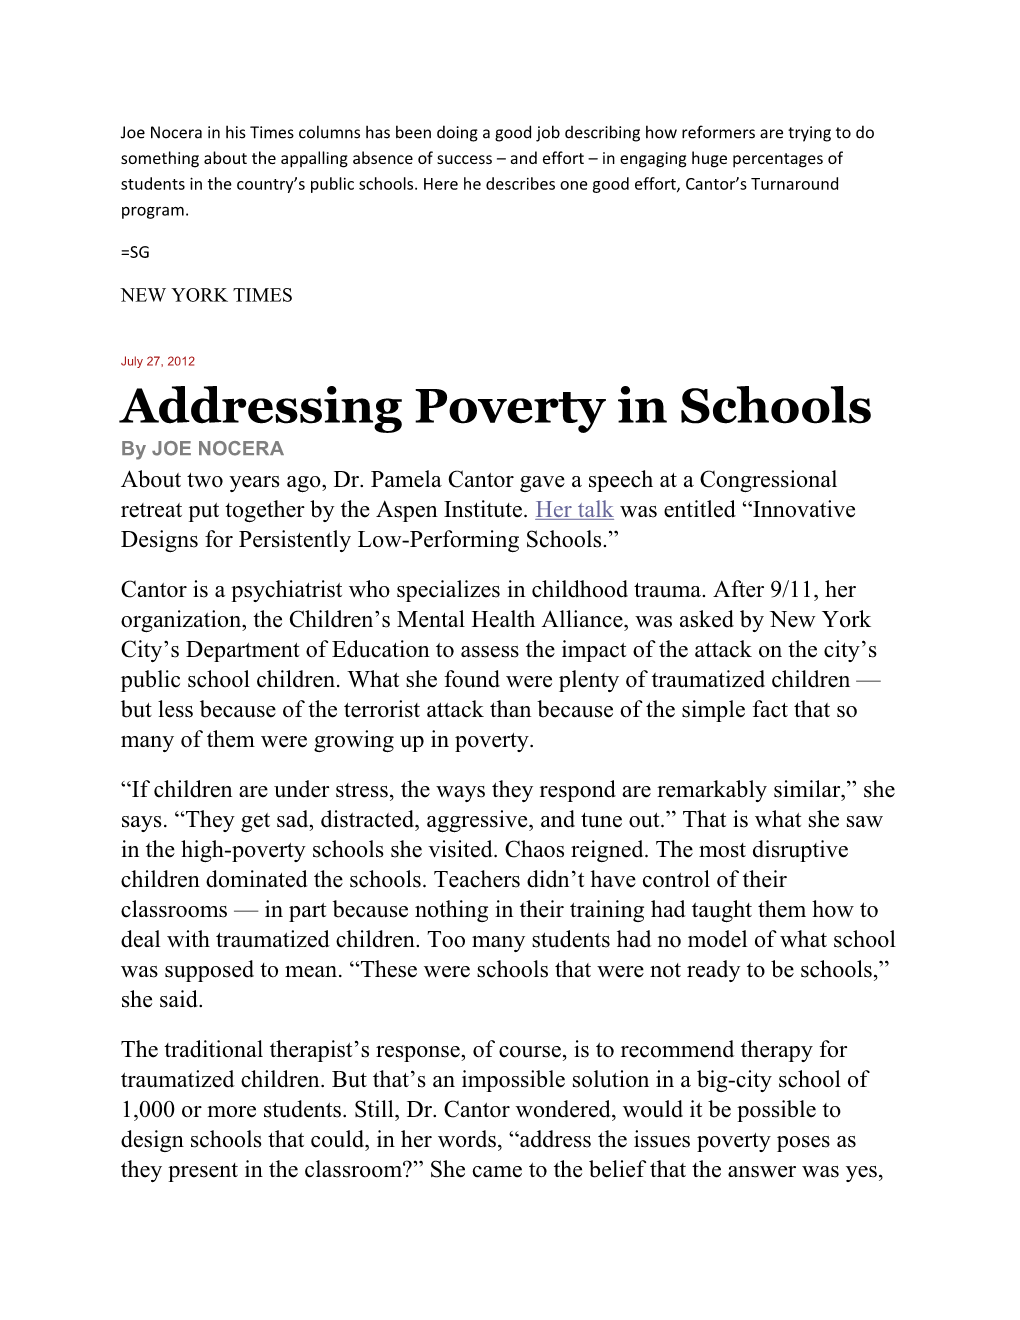 Addressing Poverty in Schools